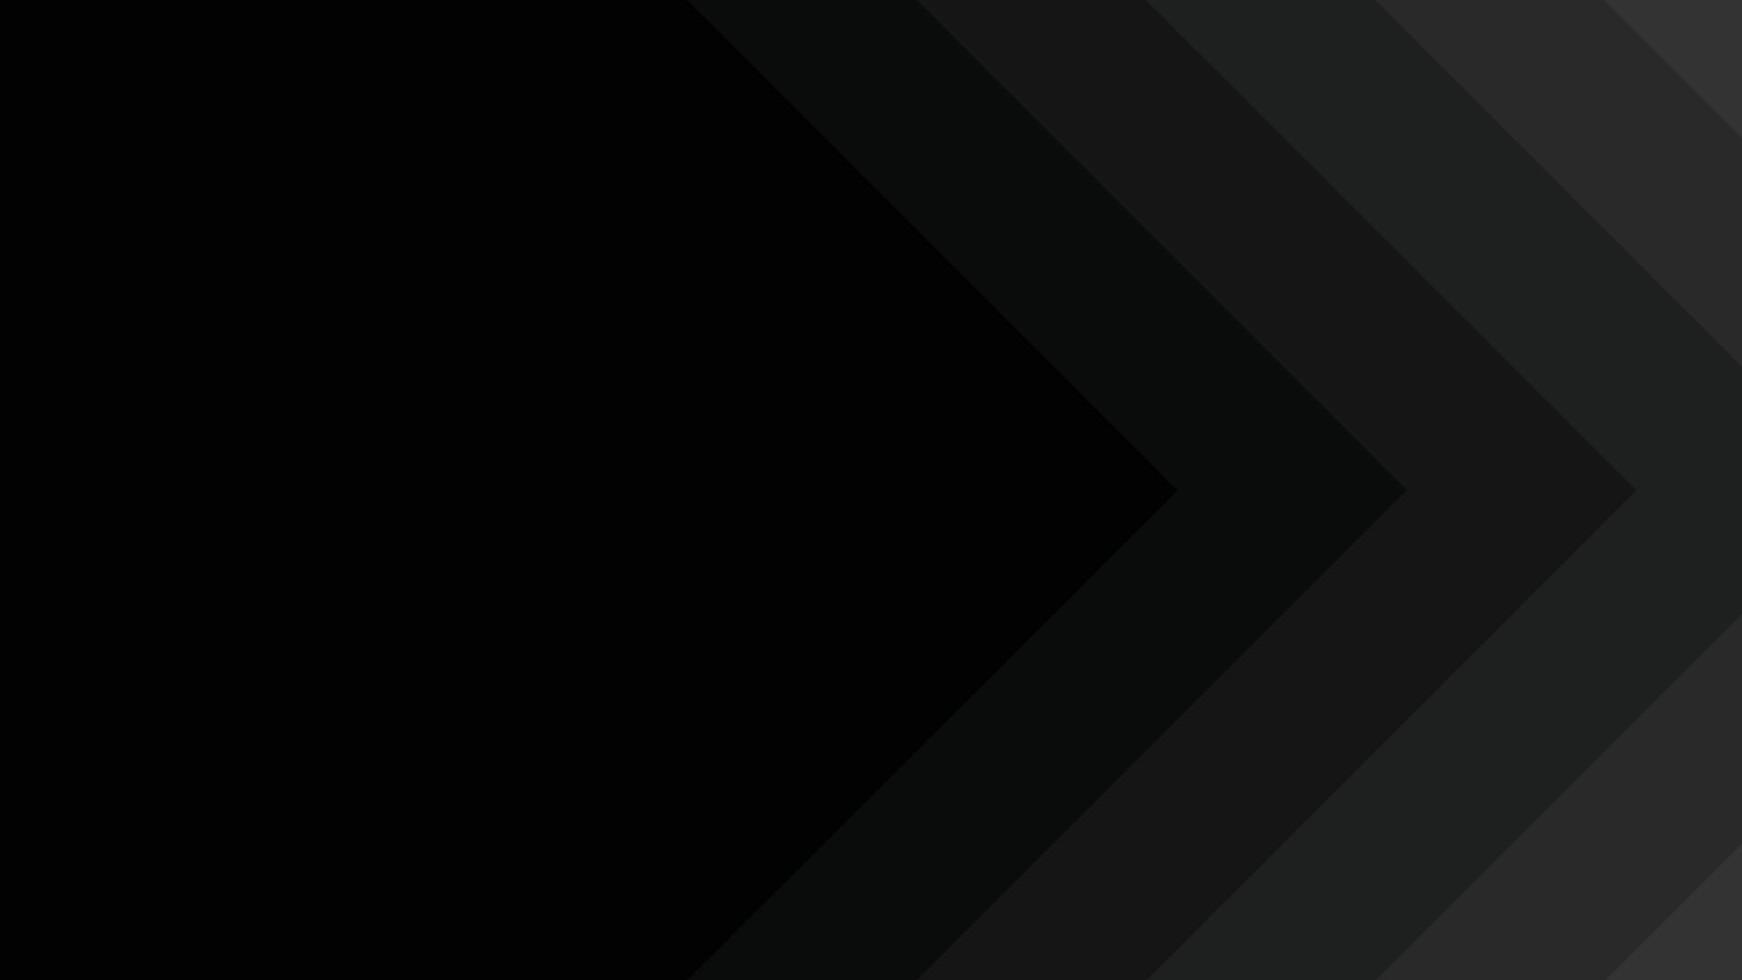 dark geometric shape background free vector